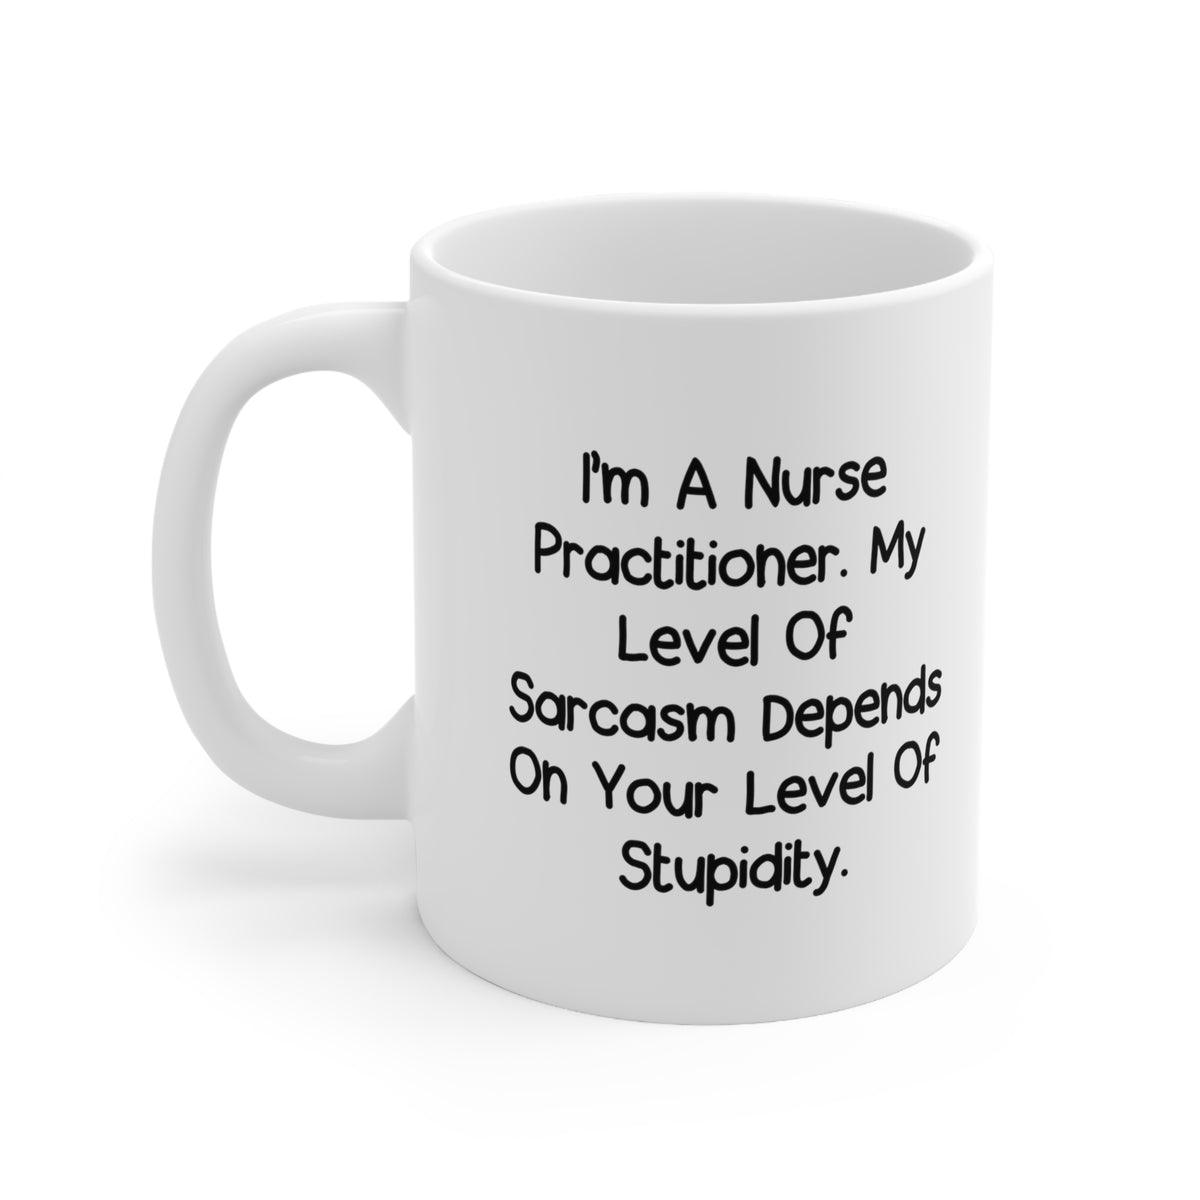 Nurse Practitioner Coffee Mug For Men Women - My Level Of Sarcasm - Family Nurse Practitioner Christmas Birthday Tea Cup